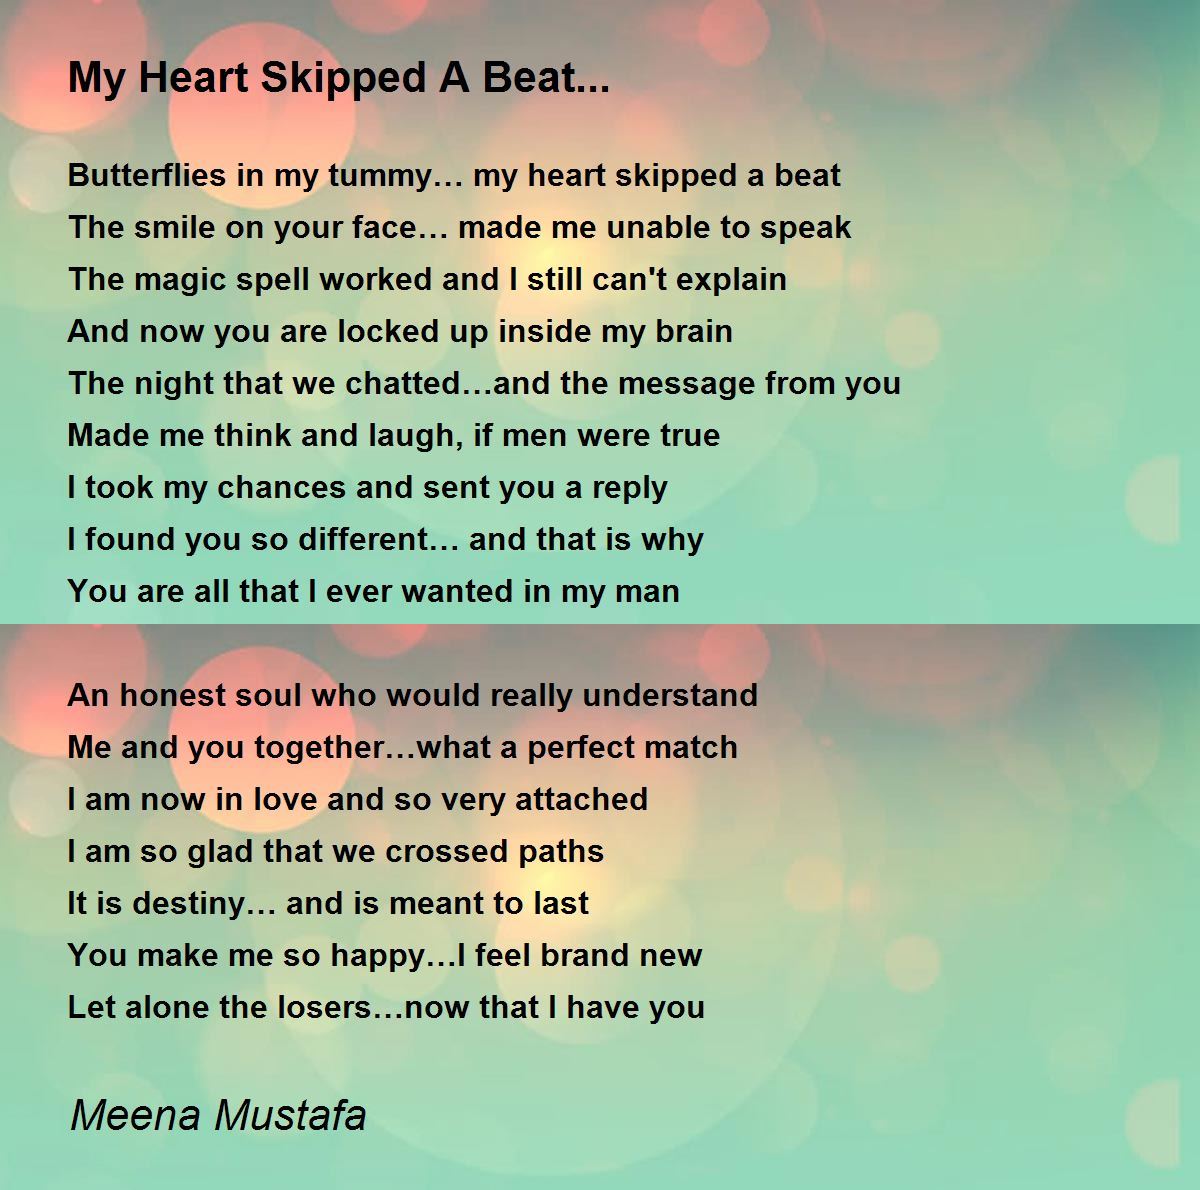 My Heart Skipped A Beat... - My Skipped A Beat... Poem by Meena